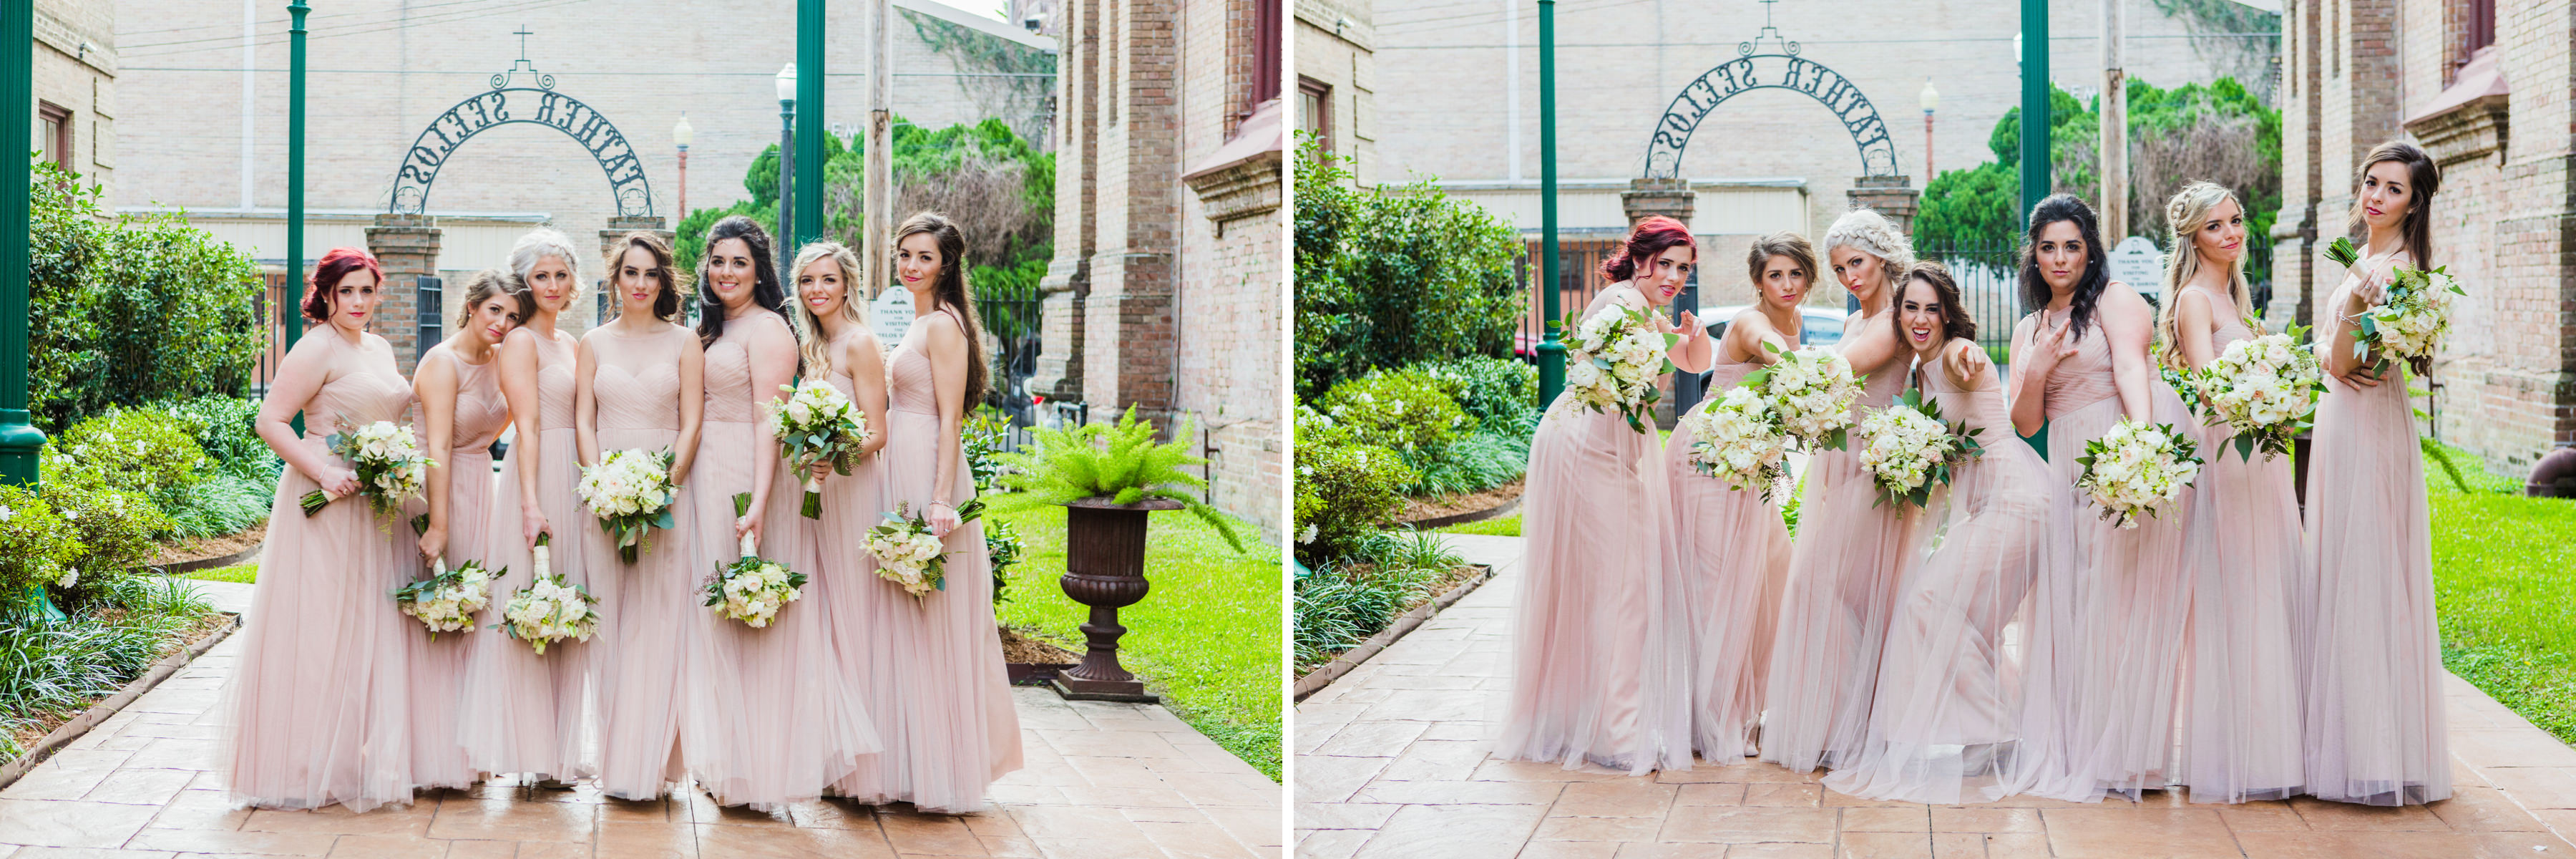 MULLET_WEDDING_NEW_ORLEANS_LOUISIANA_WEDDING_PHOTOGRAPHY_64